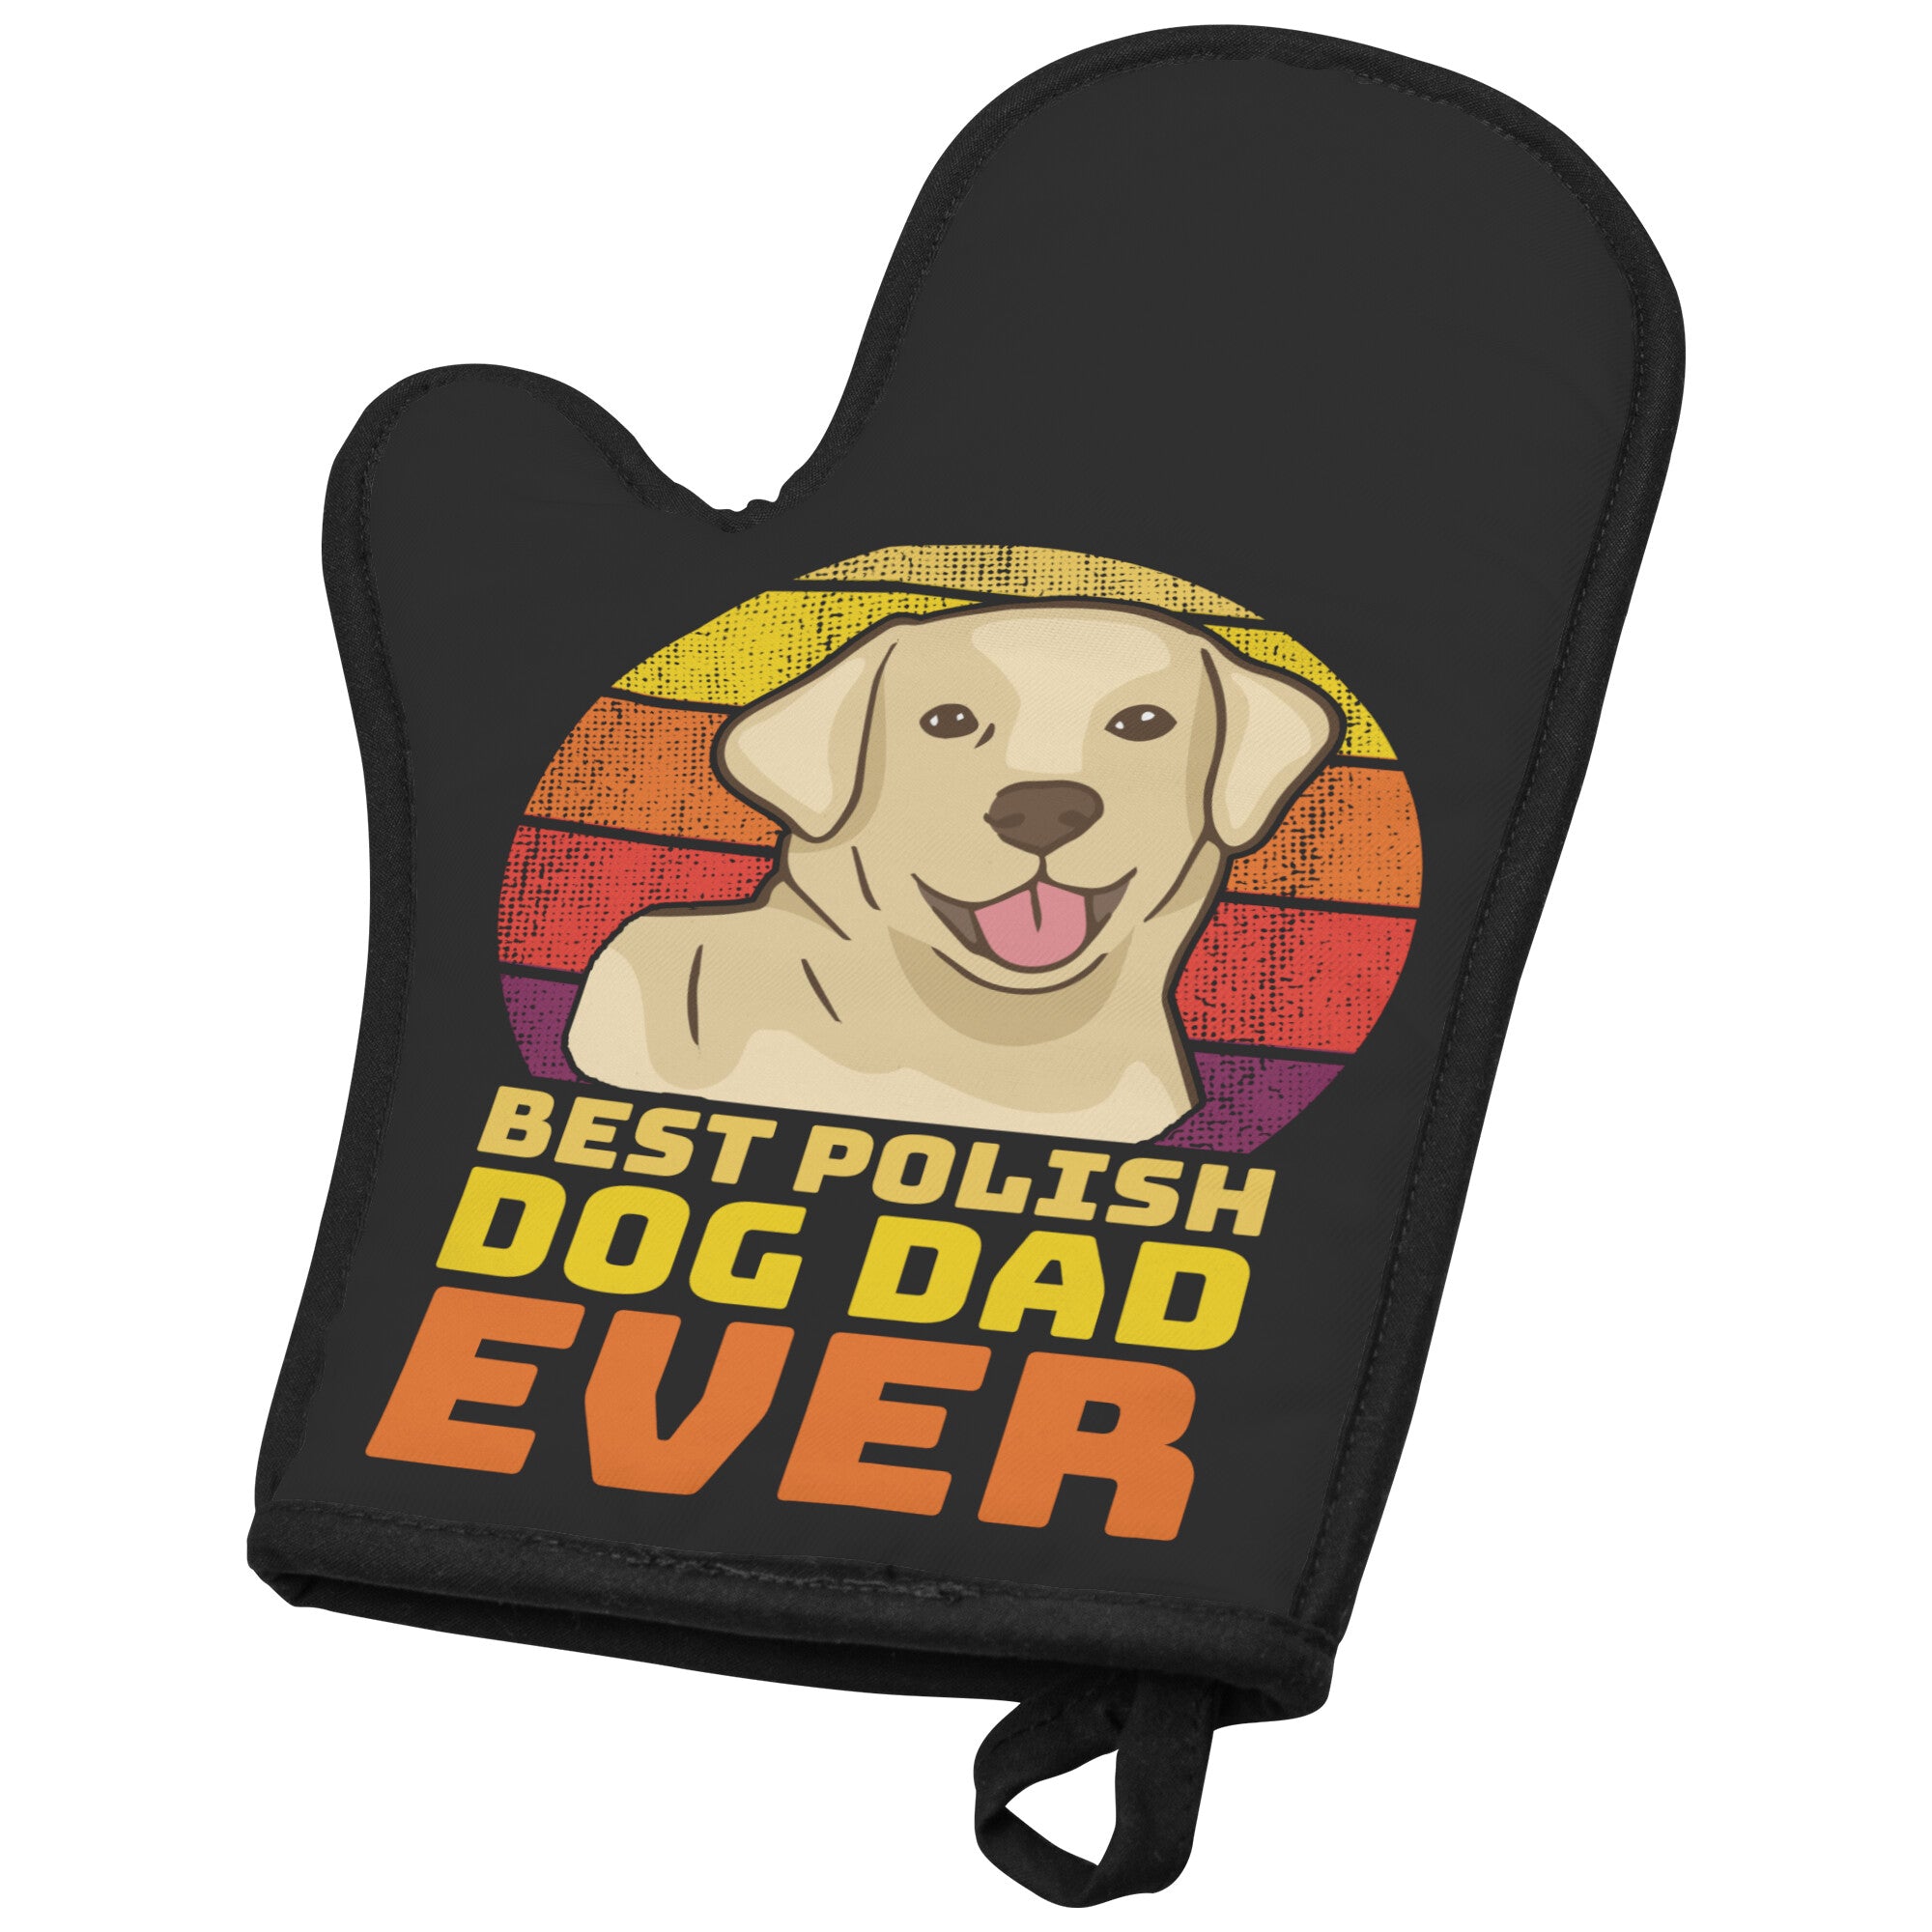 Best Polish Dog Dad Ever Oven Mitt Kitchenware teelaunch Default Title  